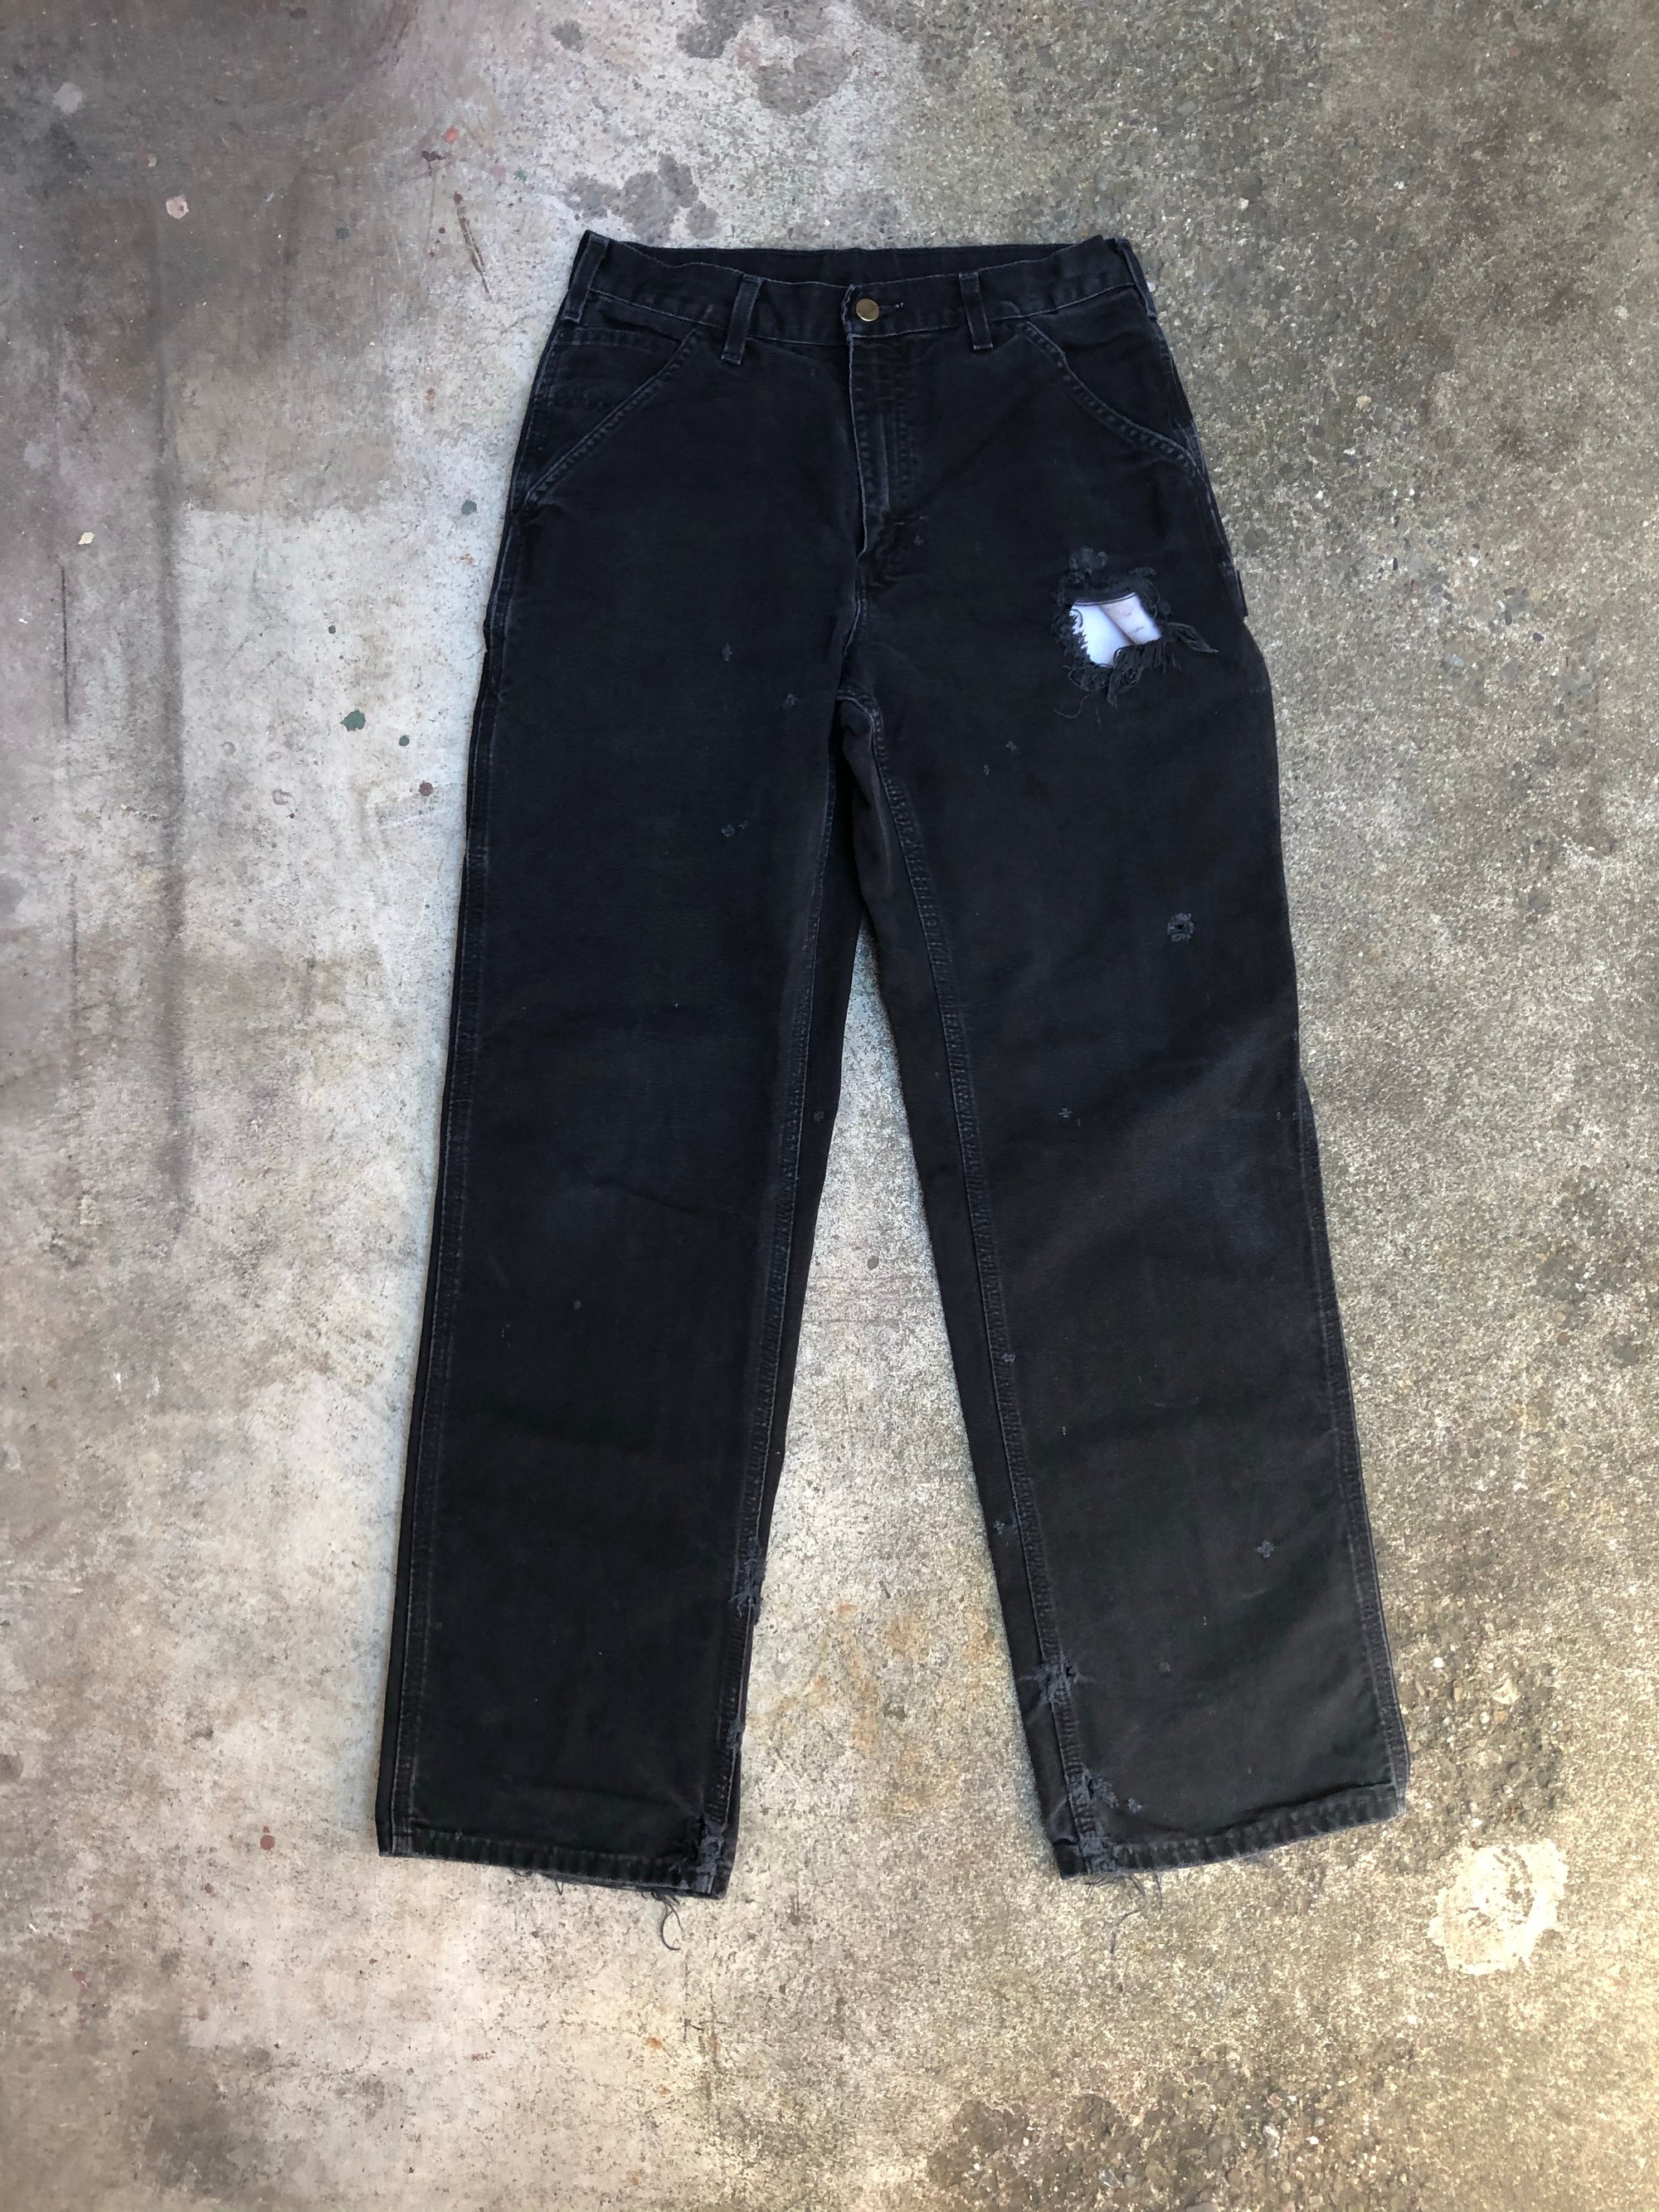 Carhartt B11 Black Single Knee Work Pants (30X32)